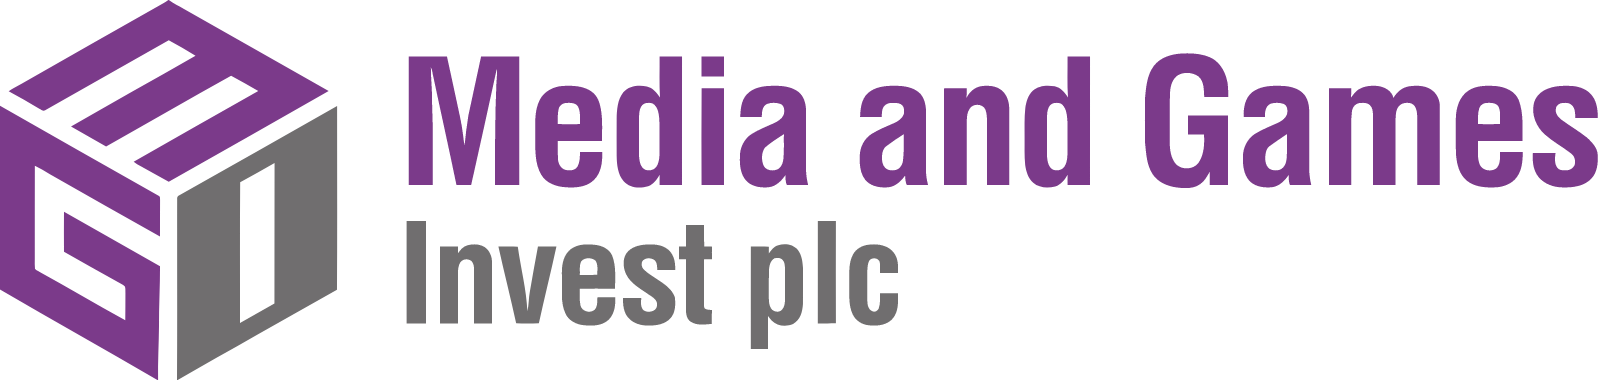 Media and Games Invest logo large (transparent PNG)